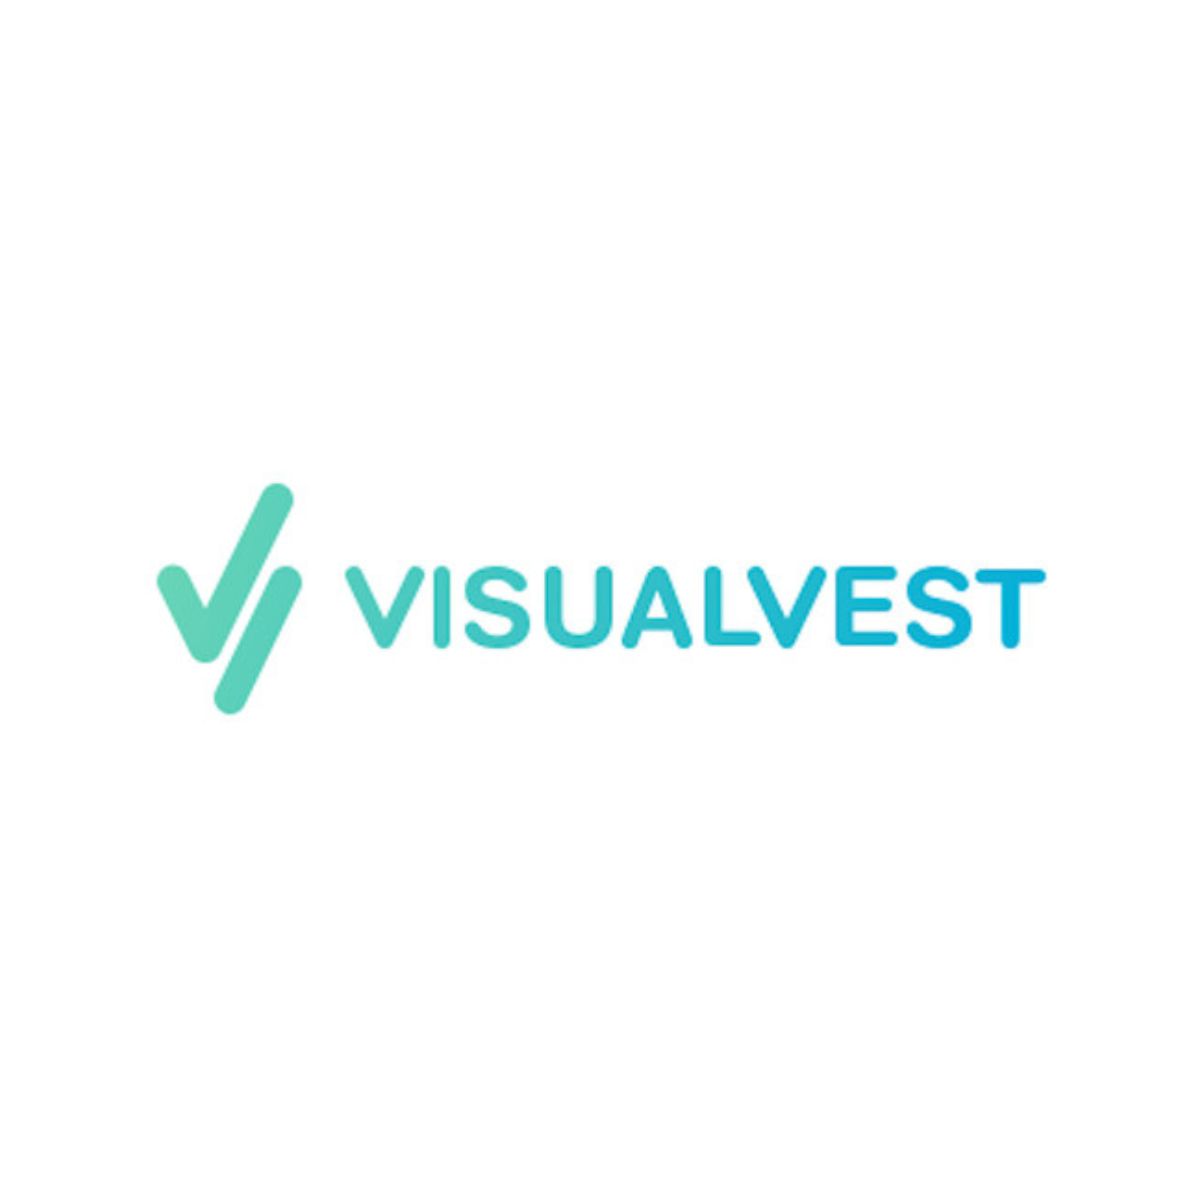 VisualVest GmbH